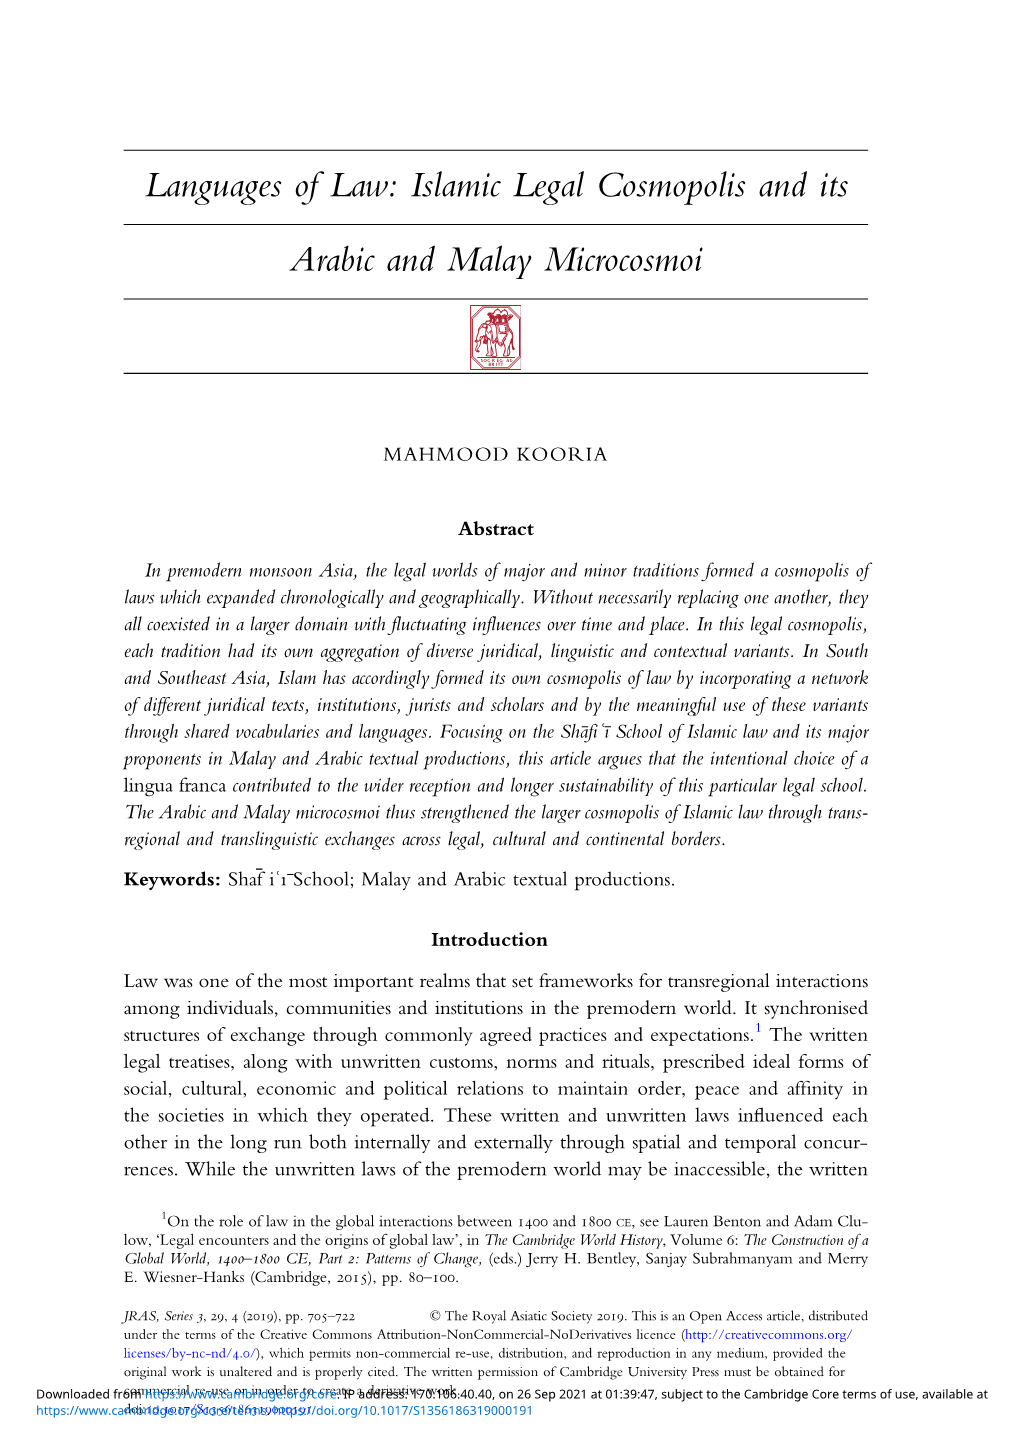 Islamic Legal Cosmopolis and Its Arabic and Malay Microcosmoi